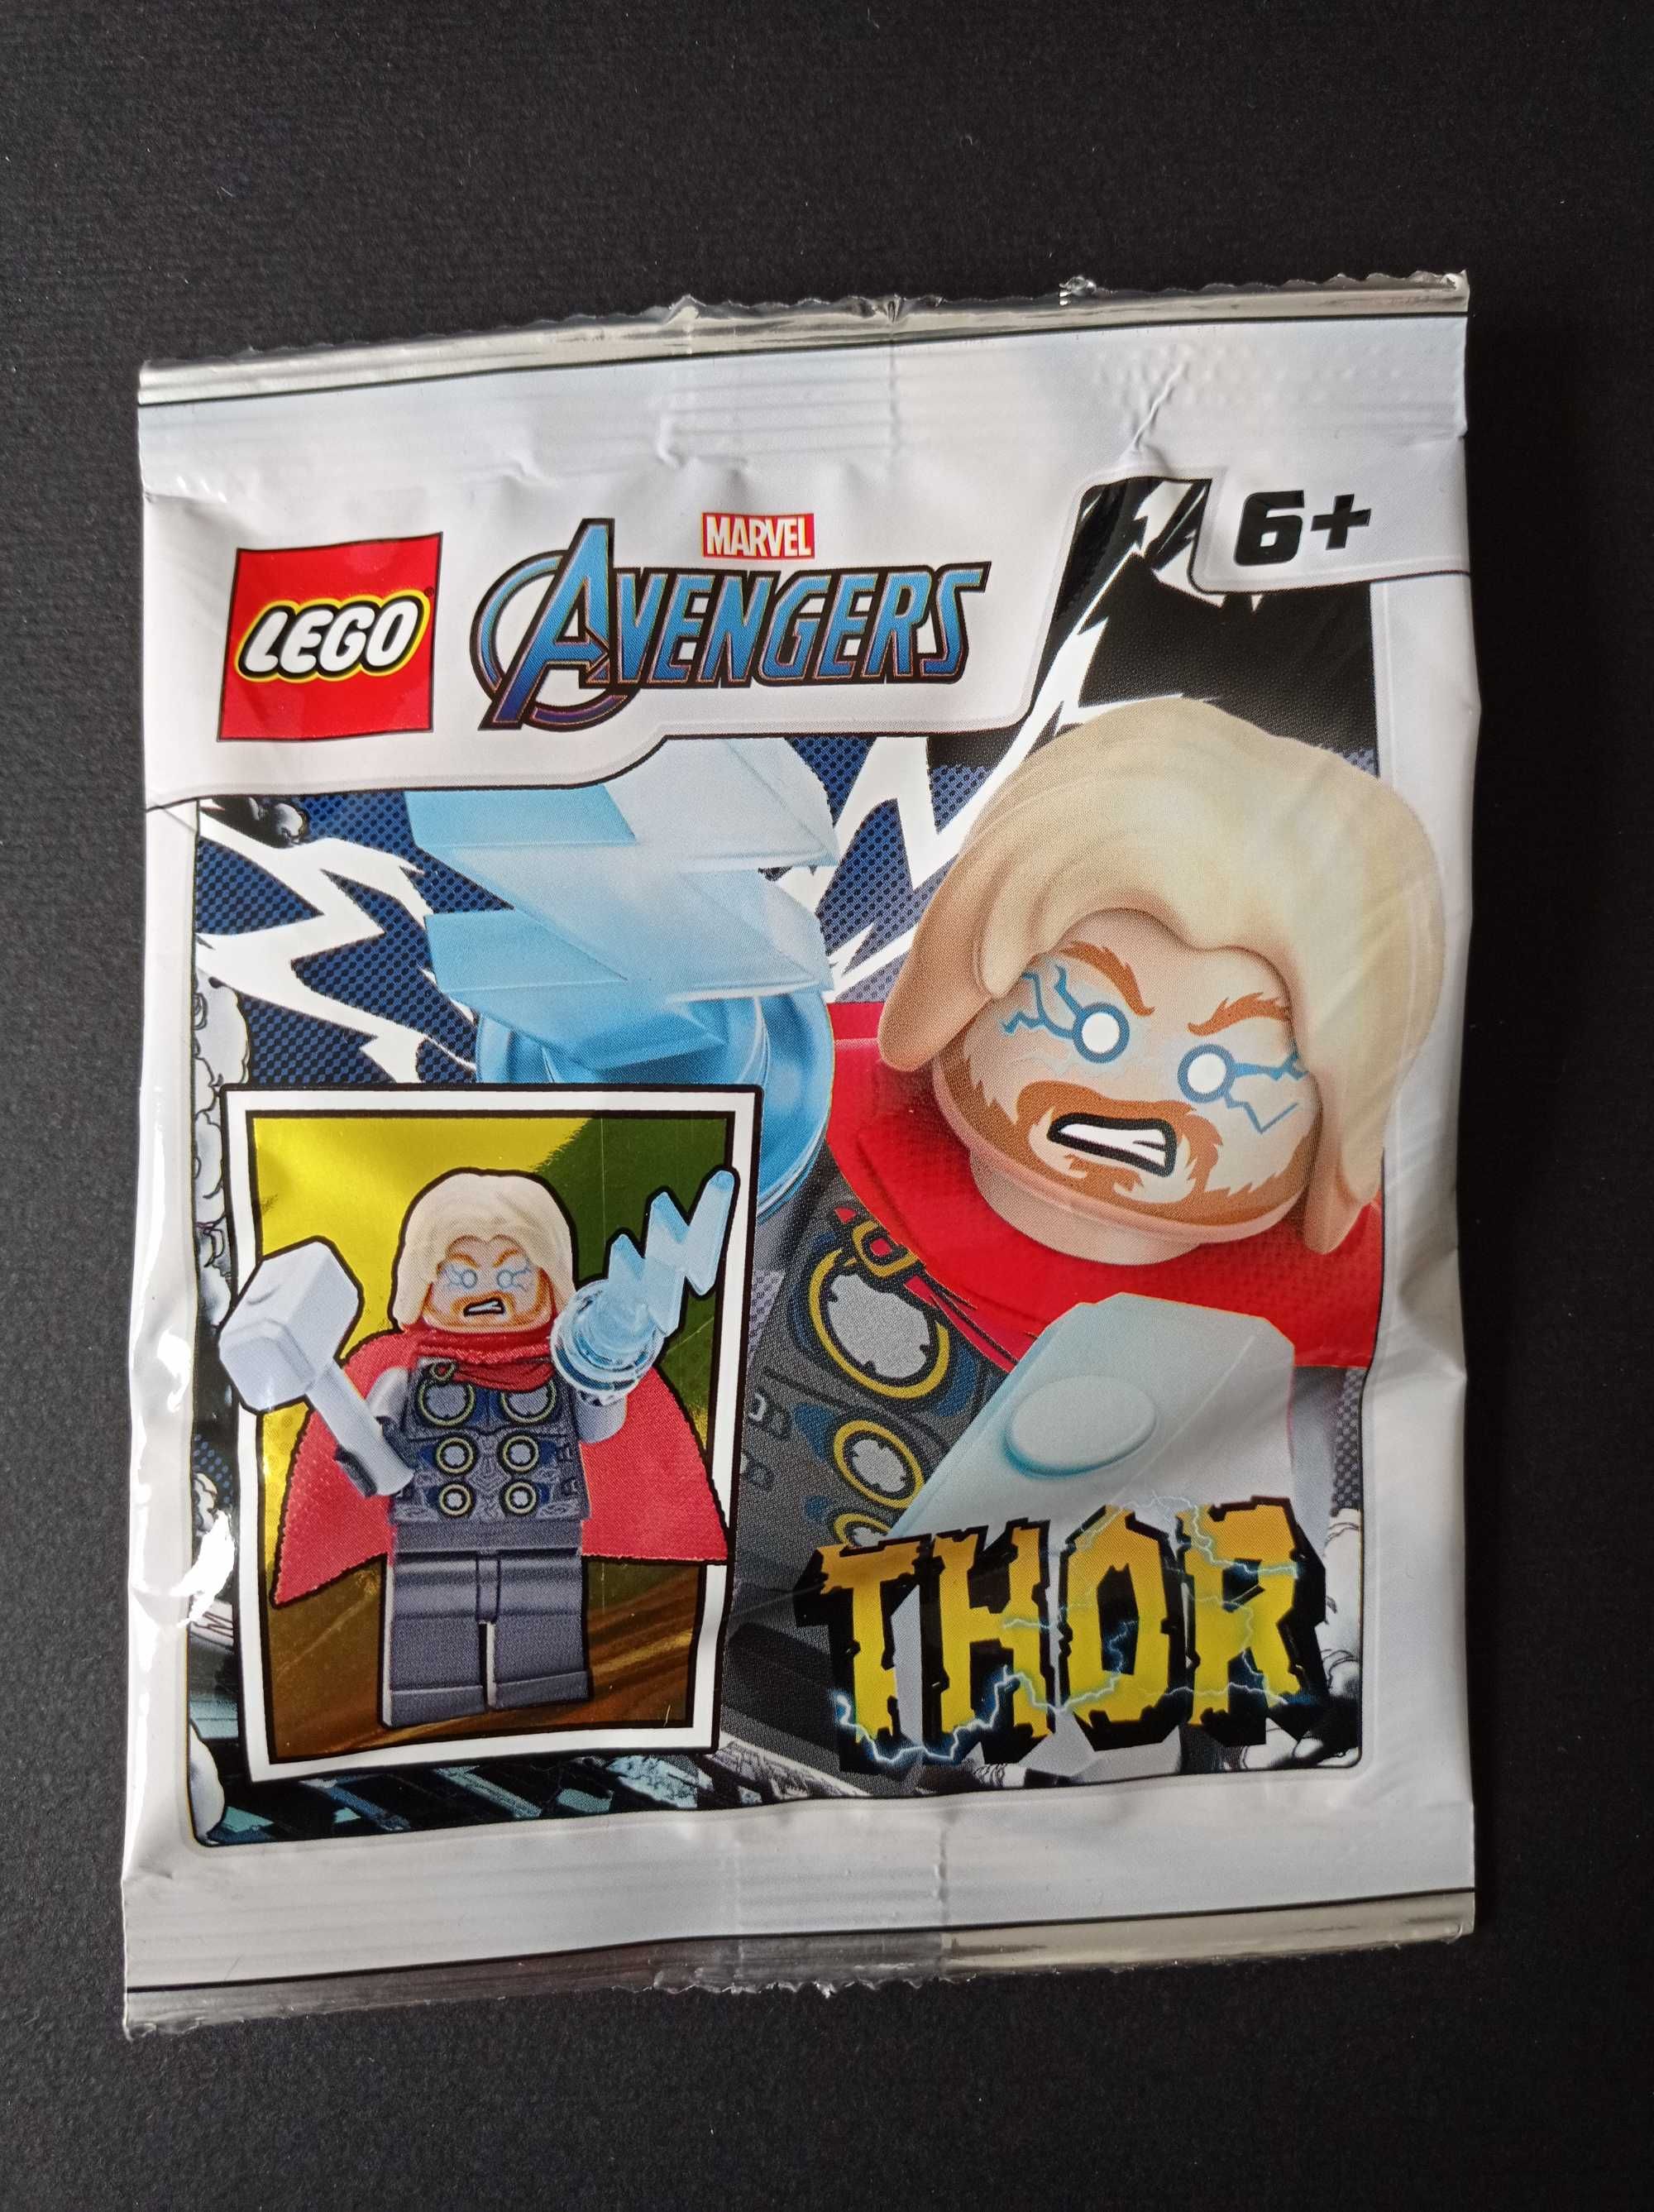 LEGO figurka ludzik minifigurka minifigures Marvel Avengers THOR